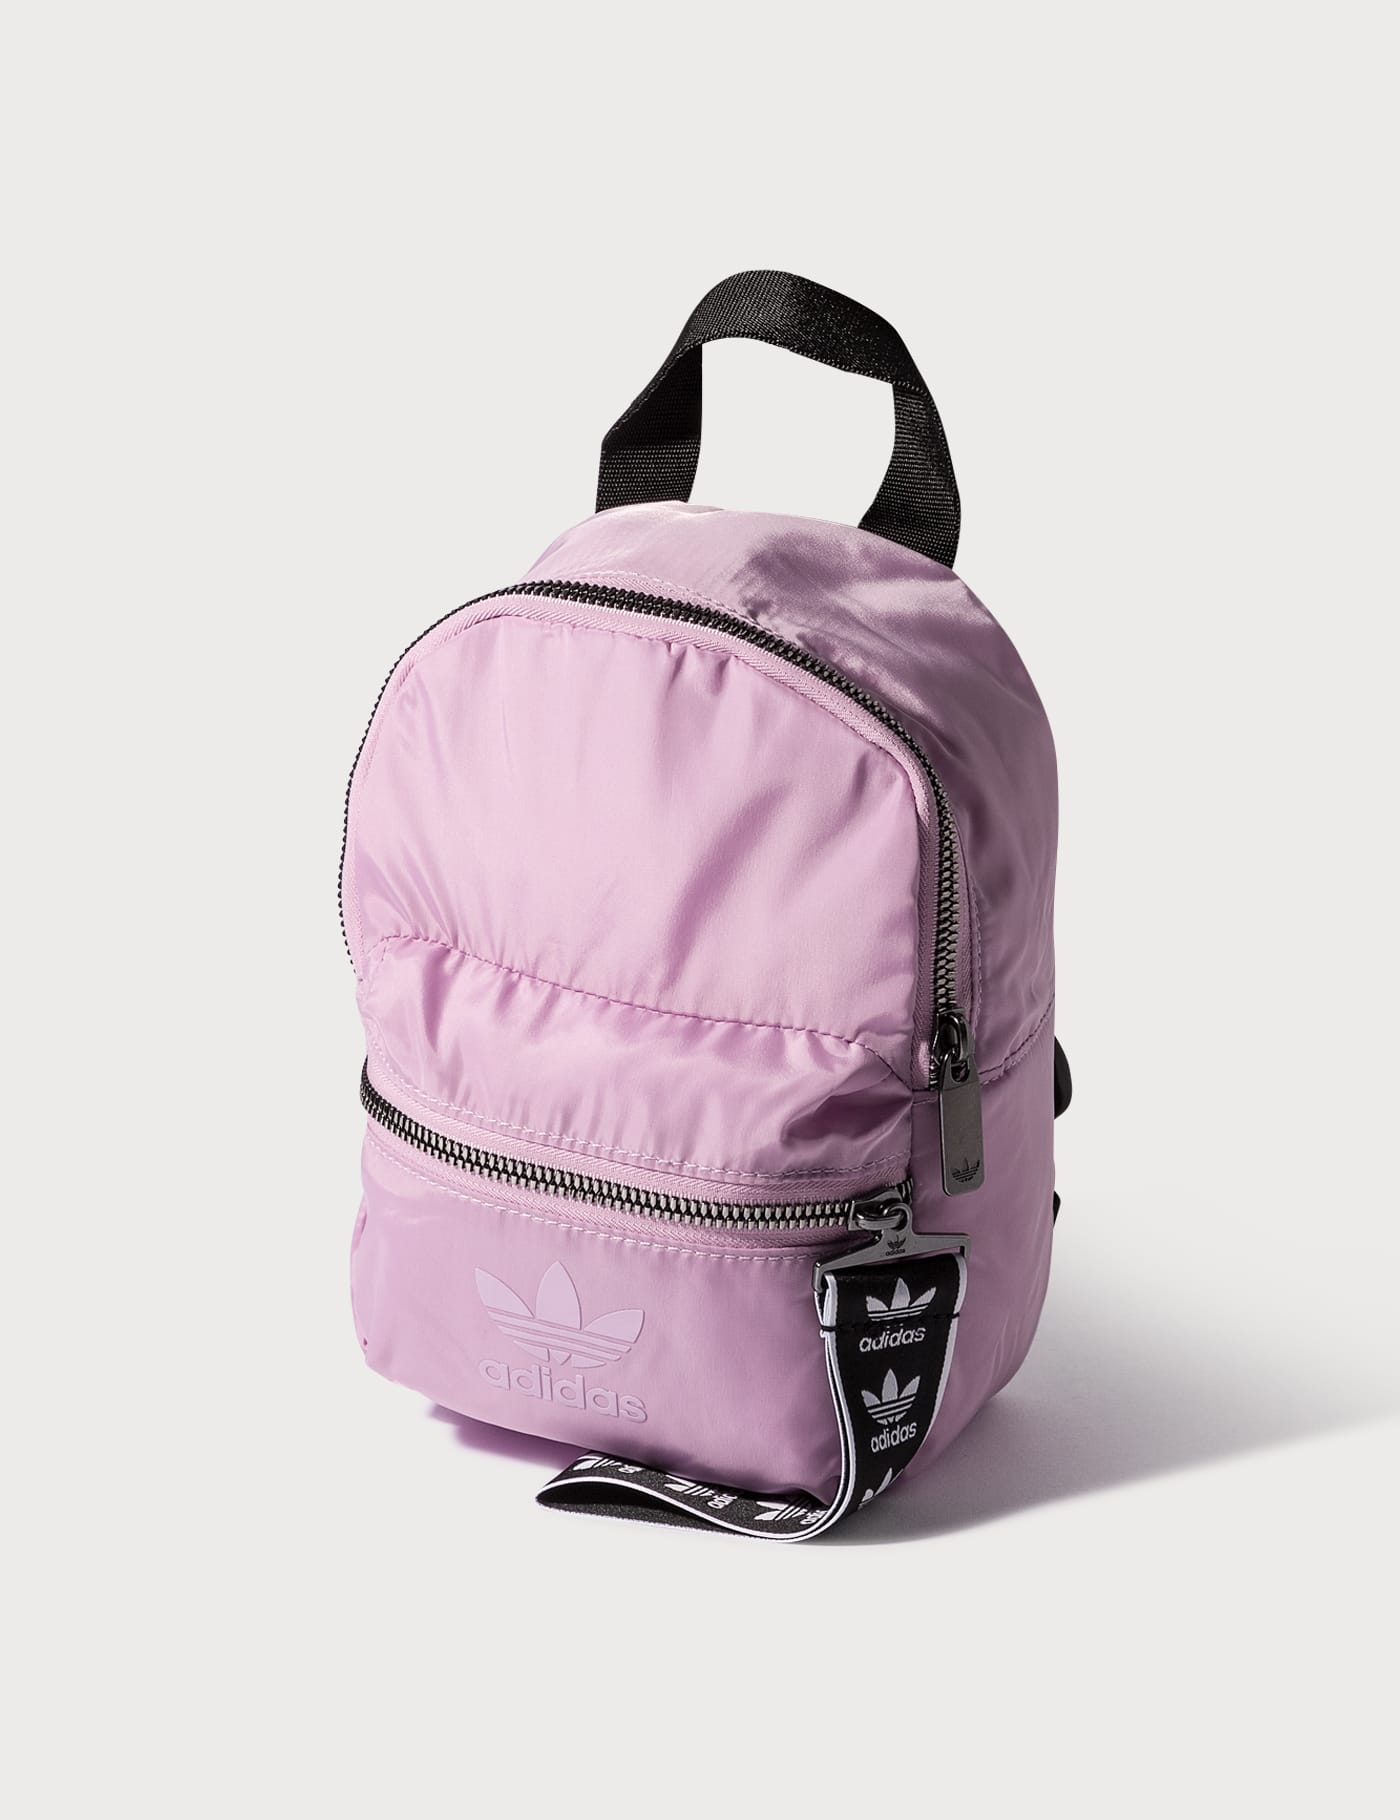 adidas lilac mini backpack